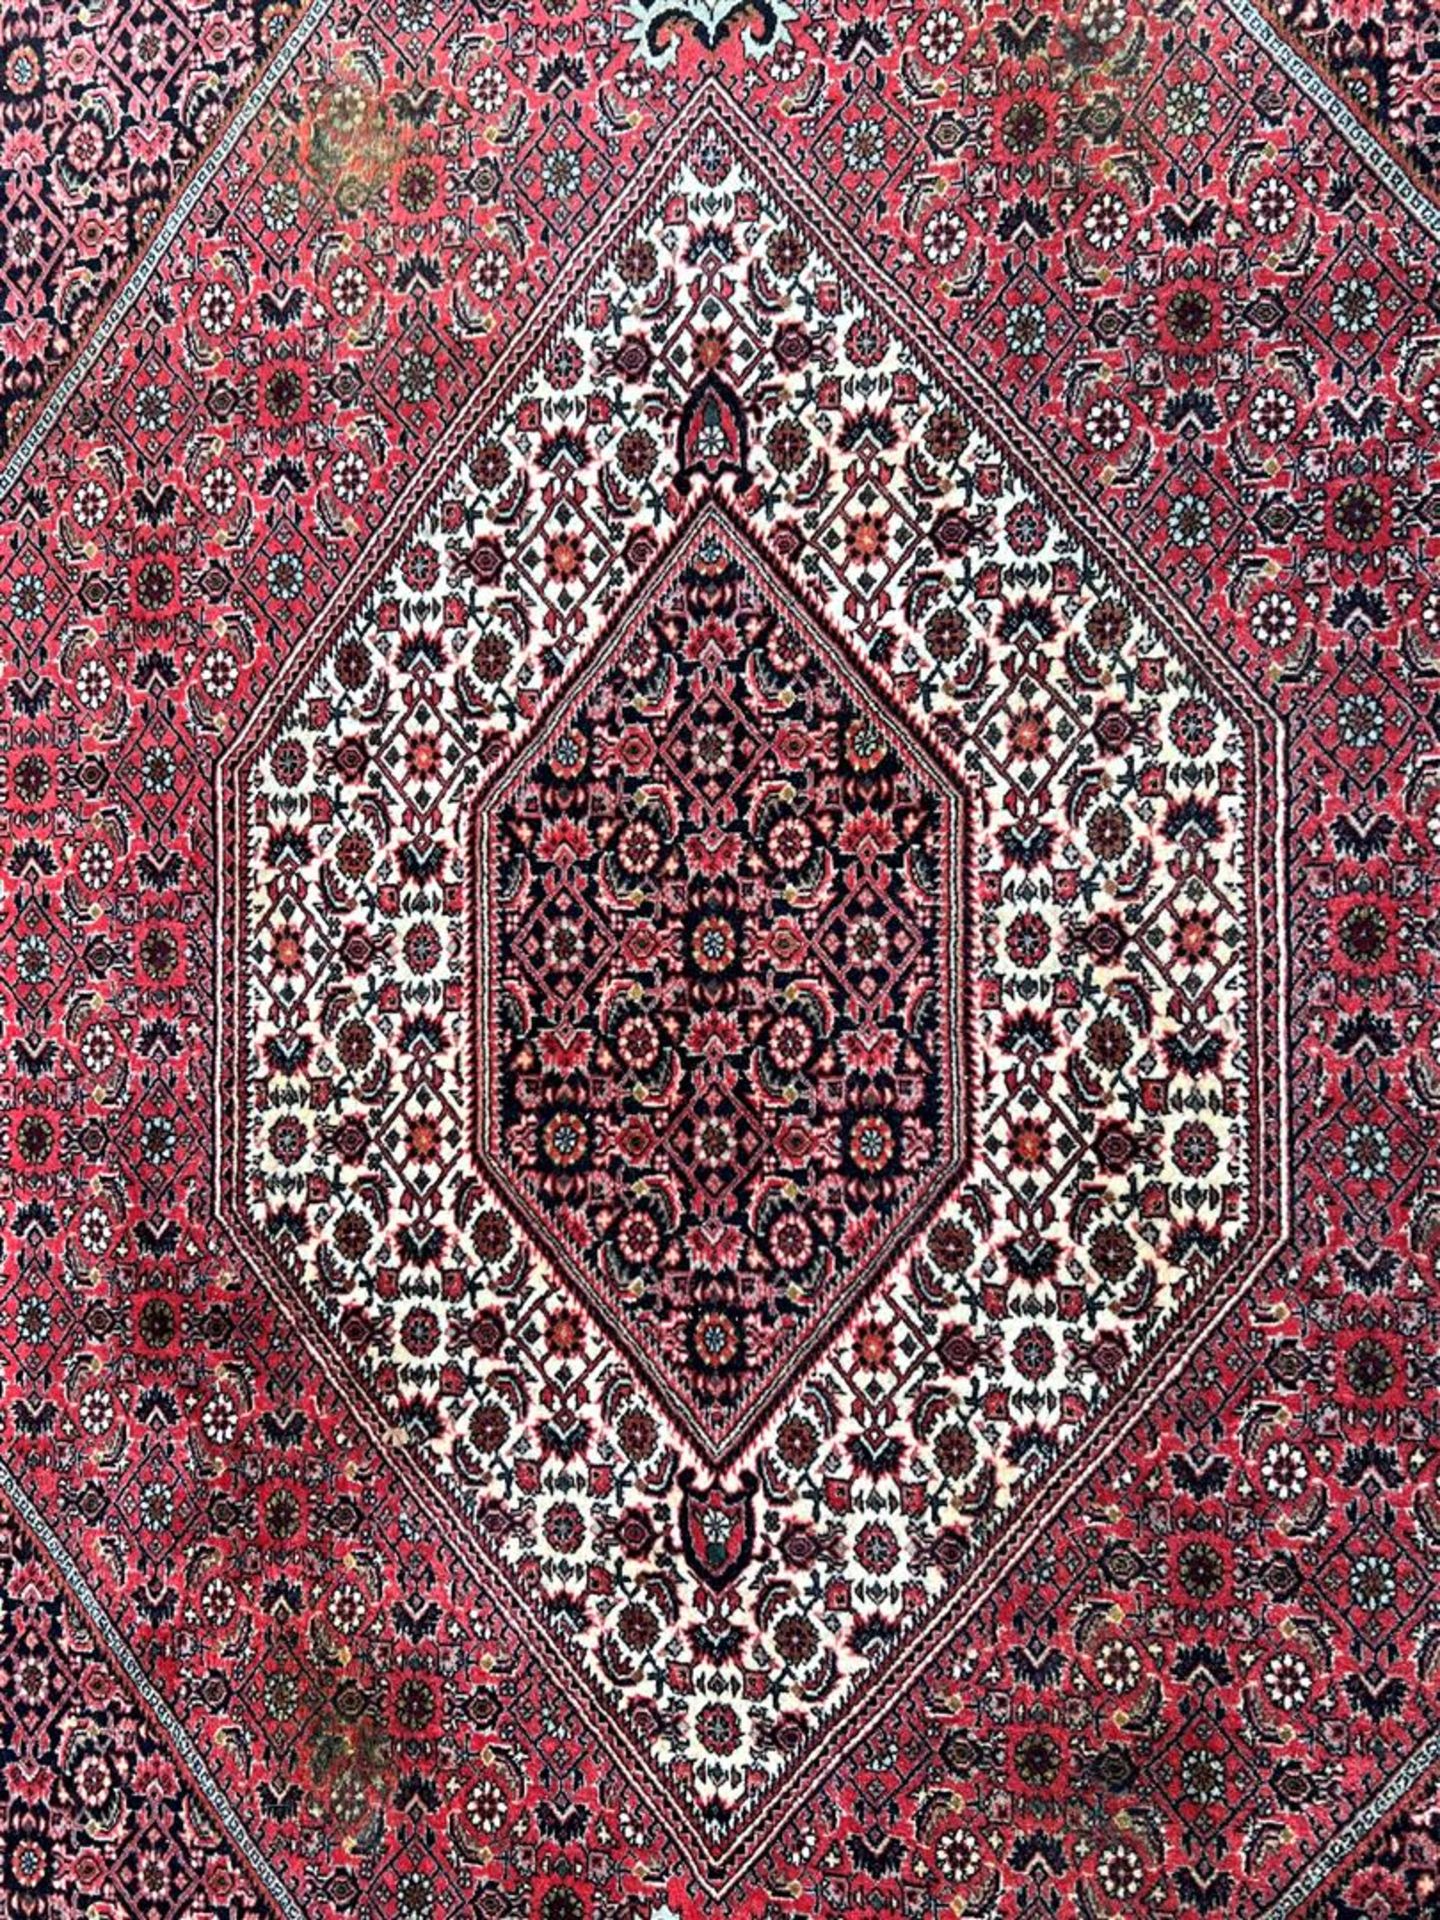 Hand-knotted wool carpet, Bidjar - Image 2 of 4